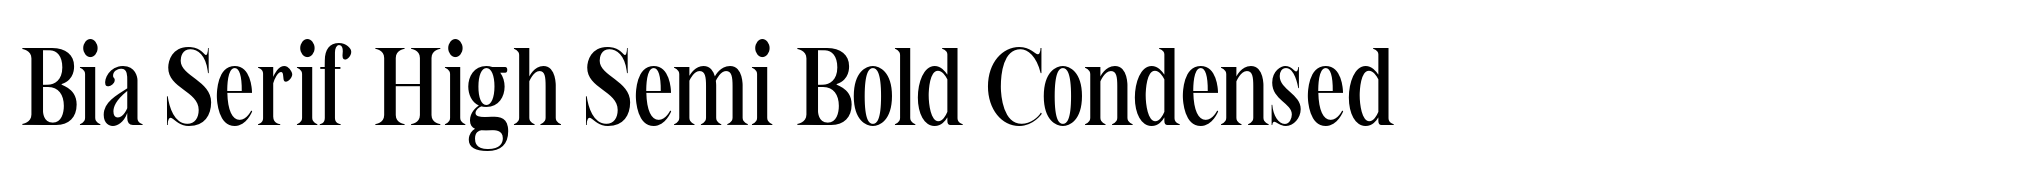 Bia Serif High Semi Bold Condensed image